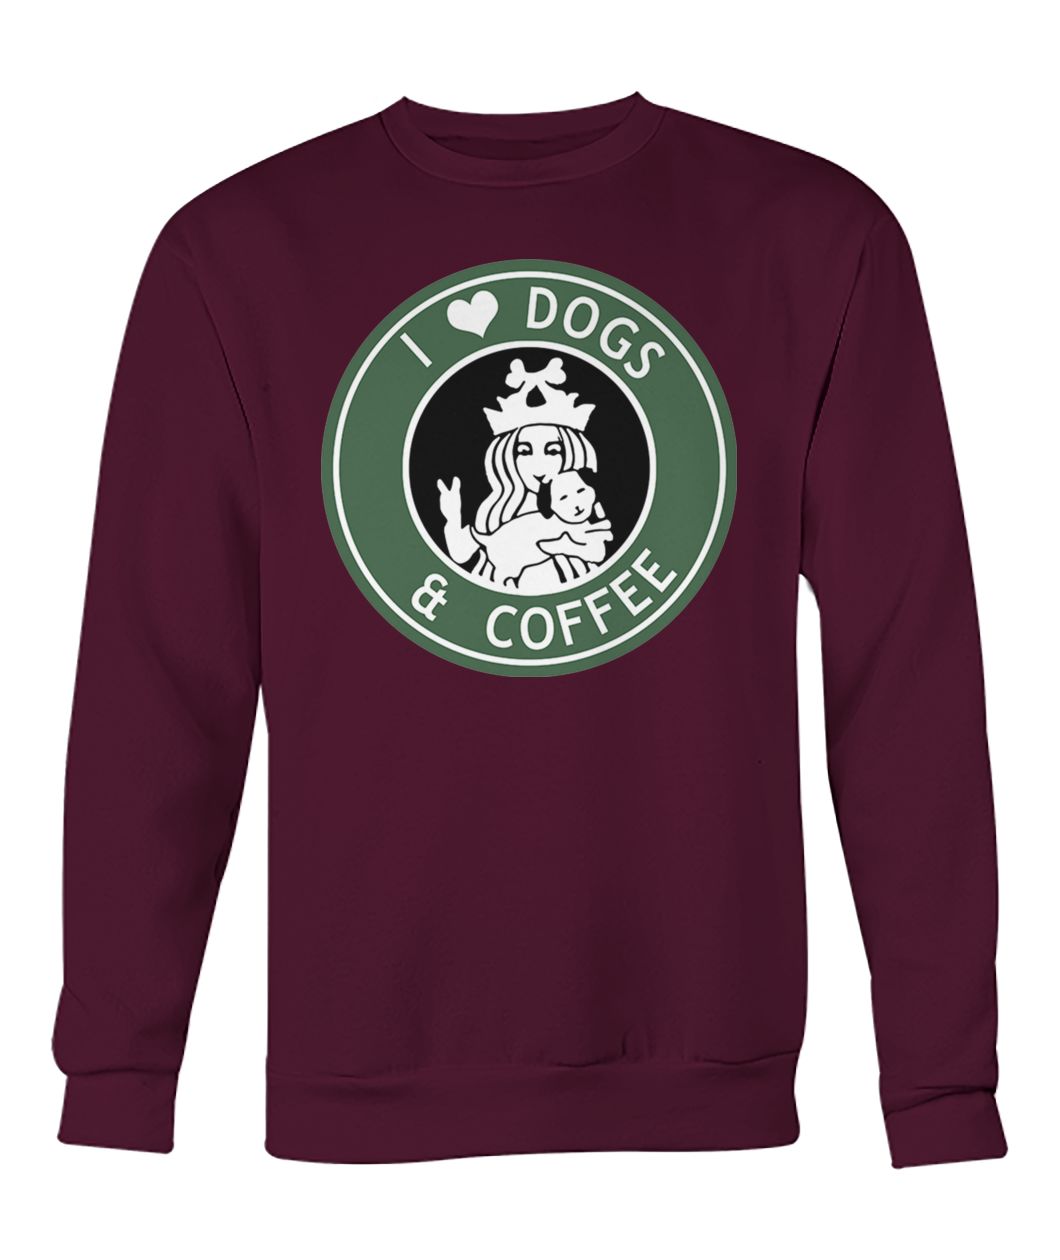 Starbucks coffee I love dogs and coffee crew neck sweatshirt